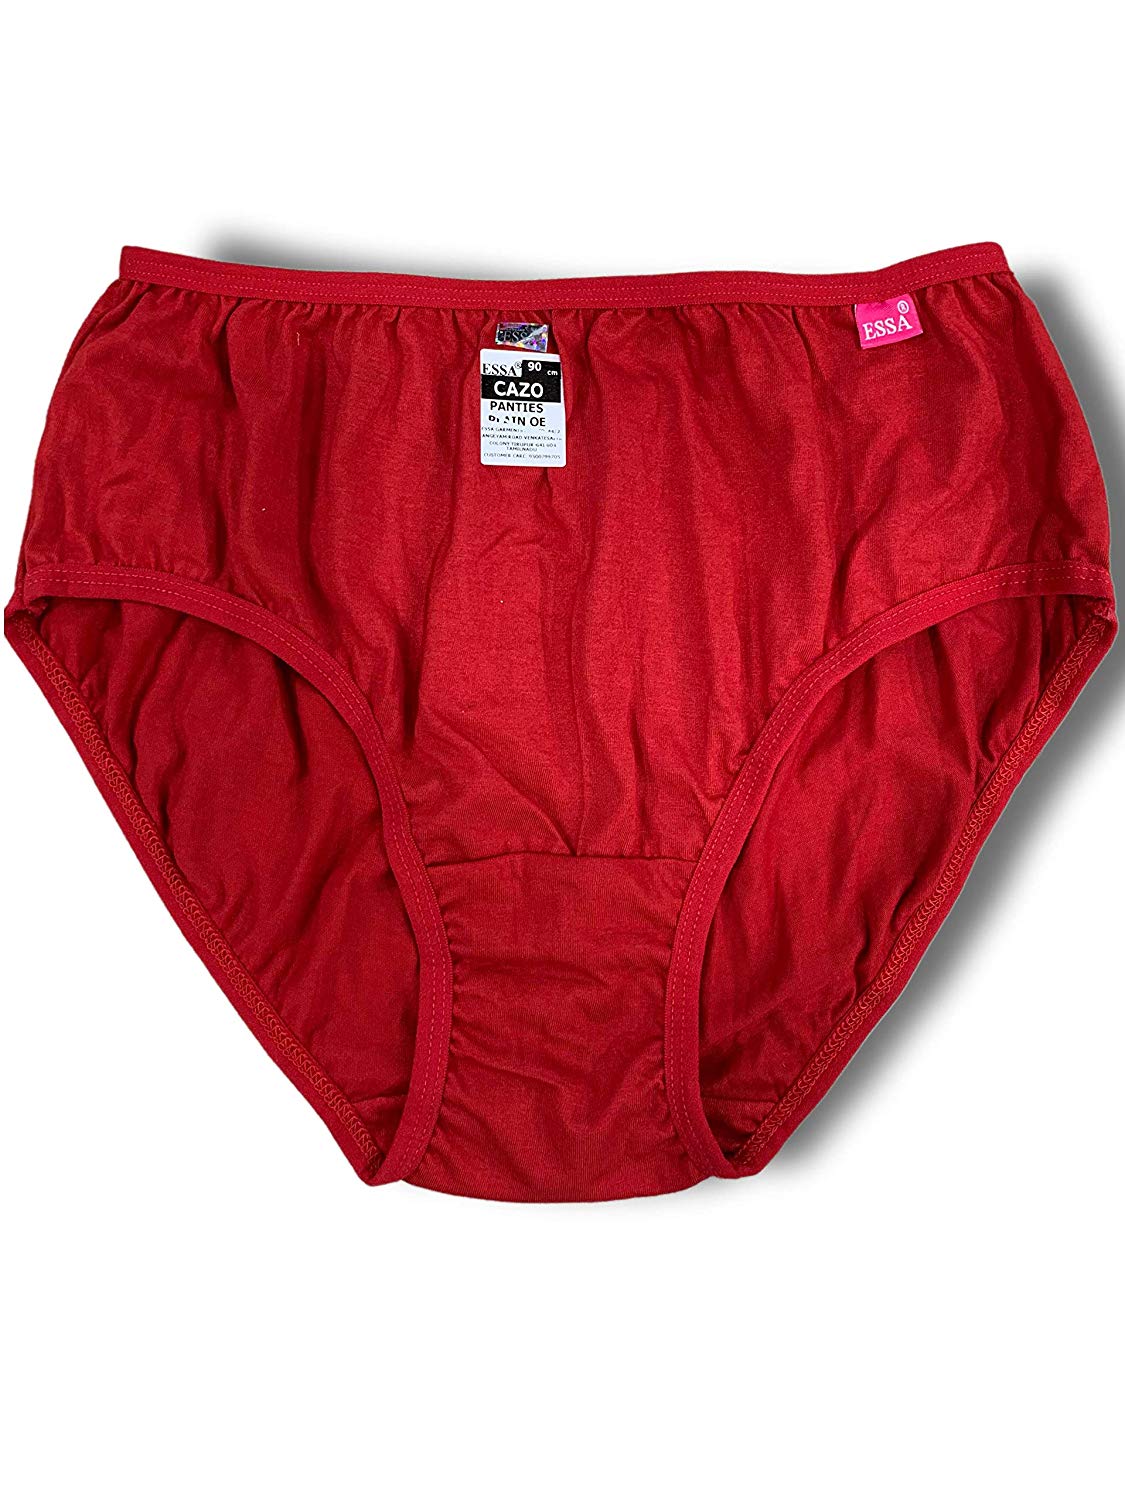 Cotton Essa Sneha Ladies Panties, Size: Medium at Rs 39.9/piece in